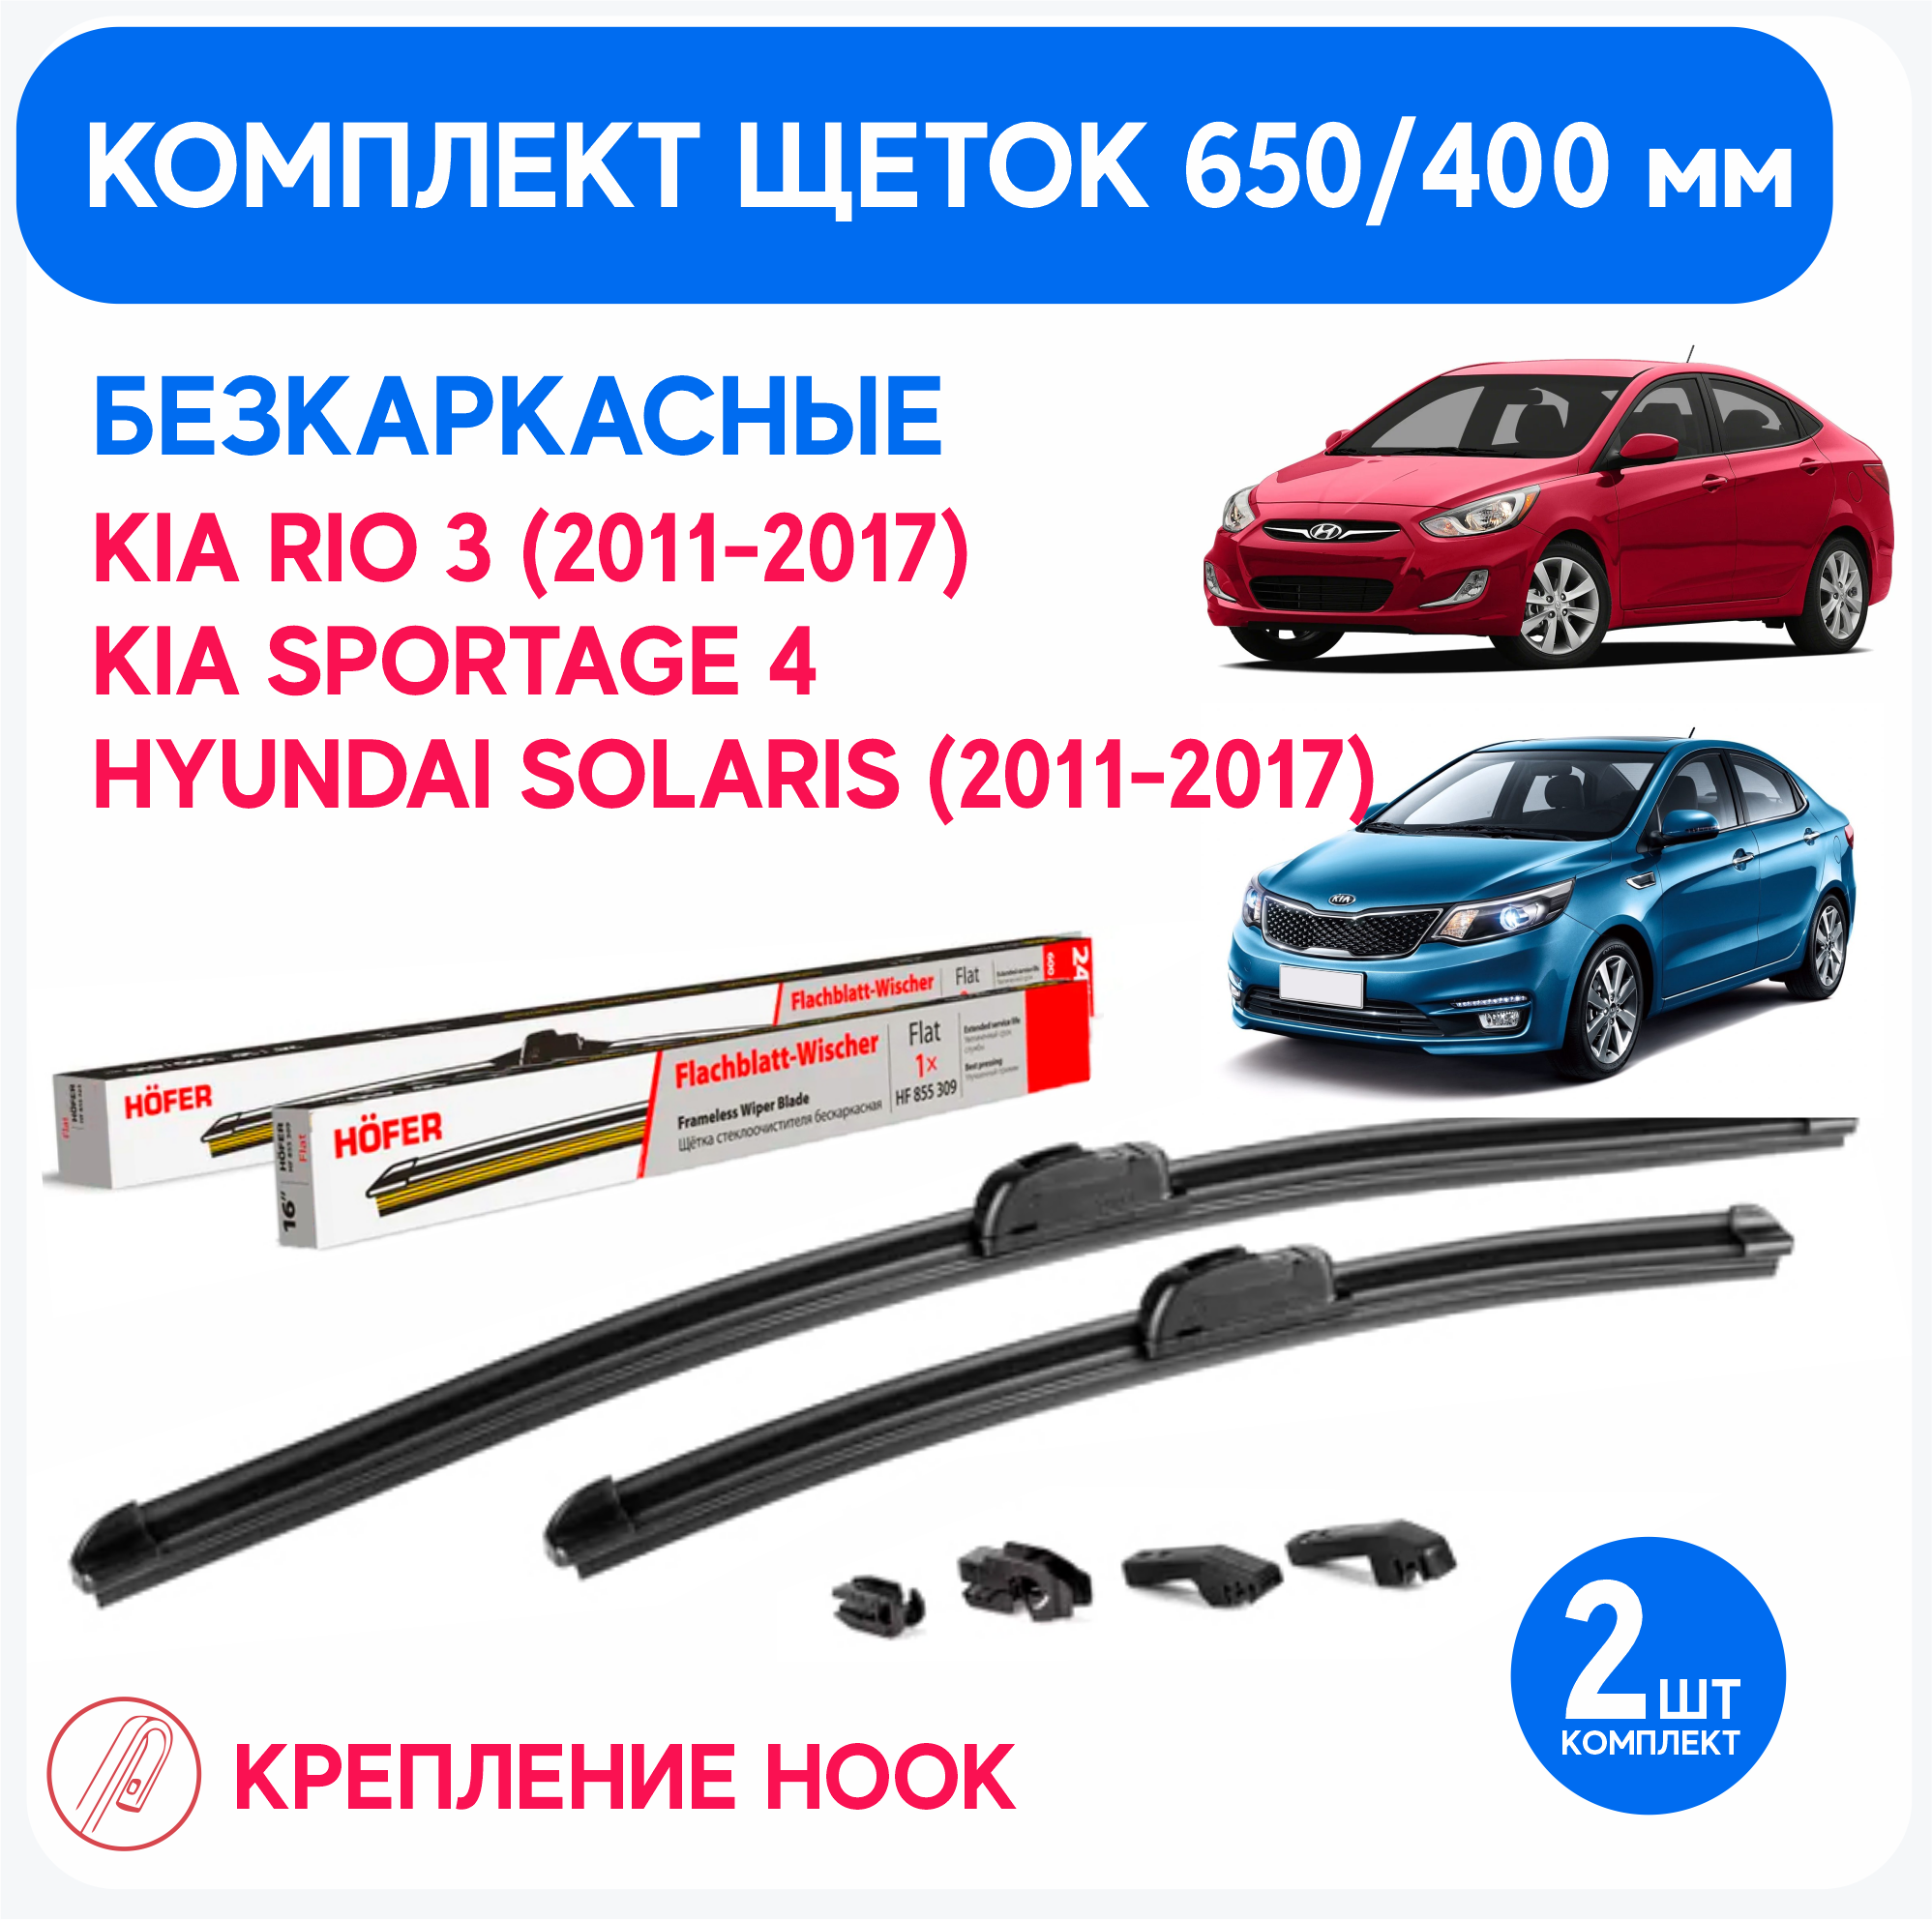 Щетки бескаркасные стеклоочистителя Kia Rio 3 (2011-2017) Kia Sportage 4 Hyundai Solaris (2011-2017) 650 / 400 мм комплект 2 шт.